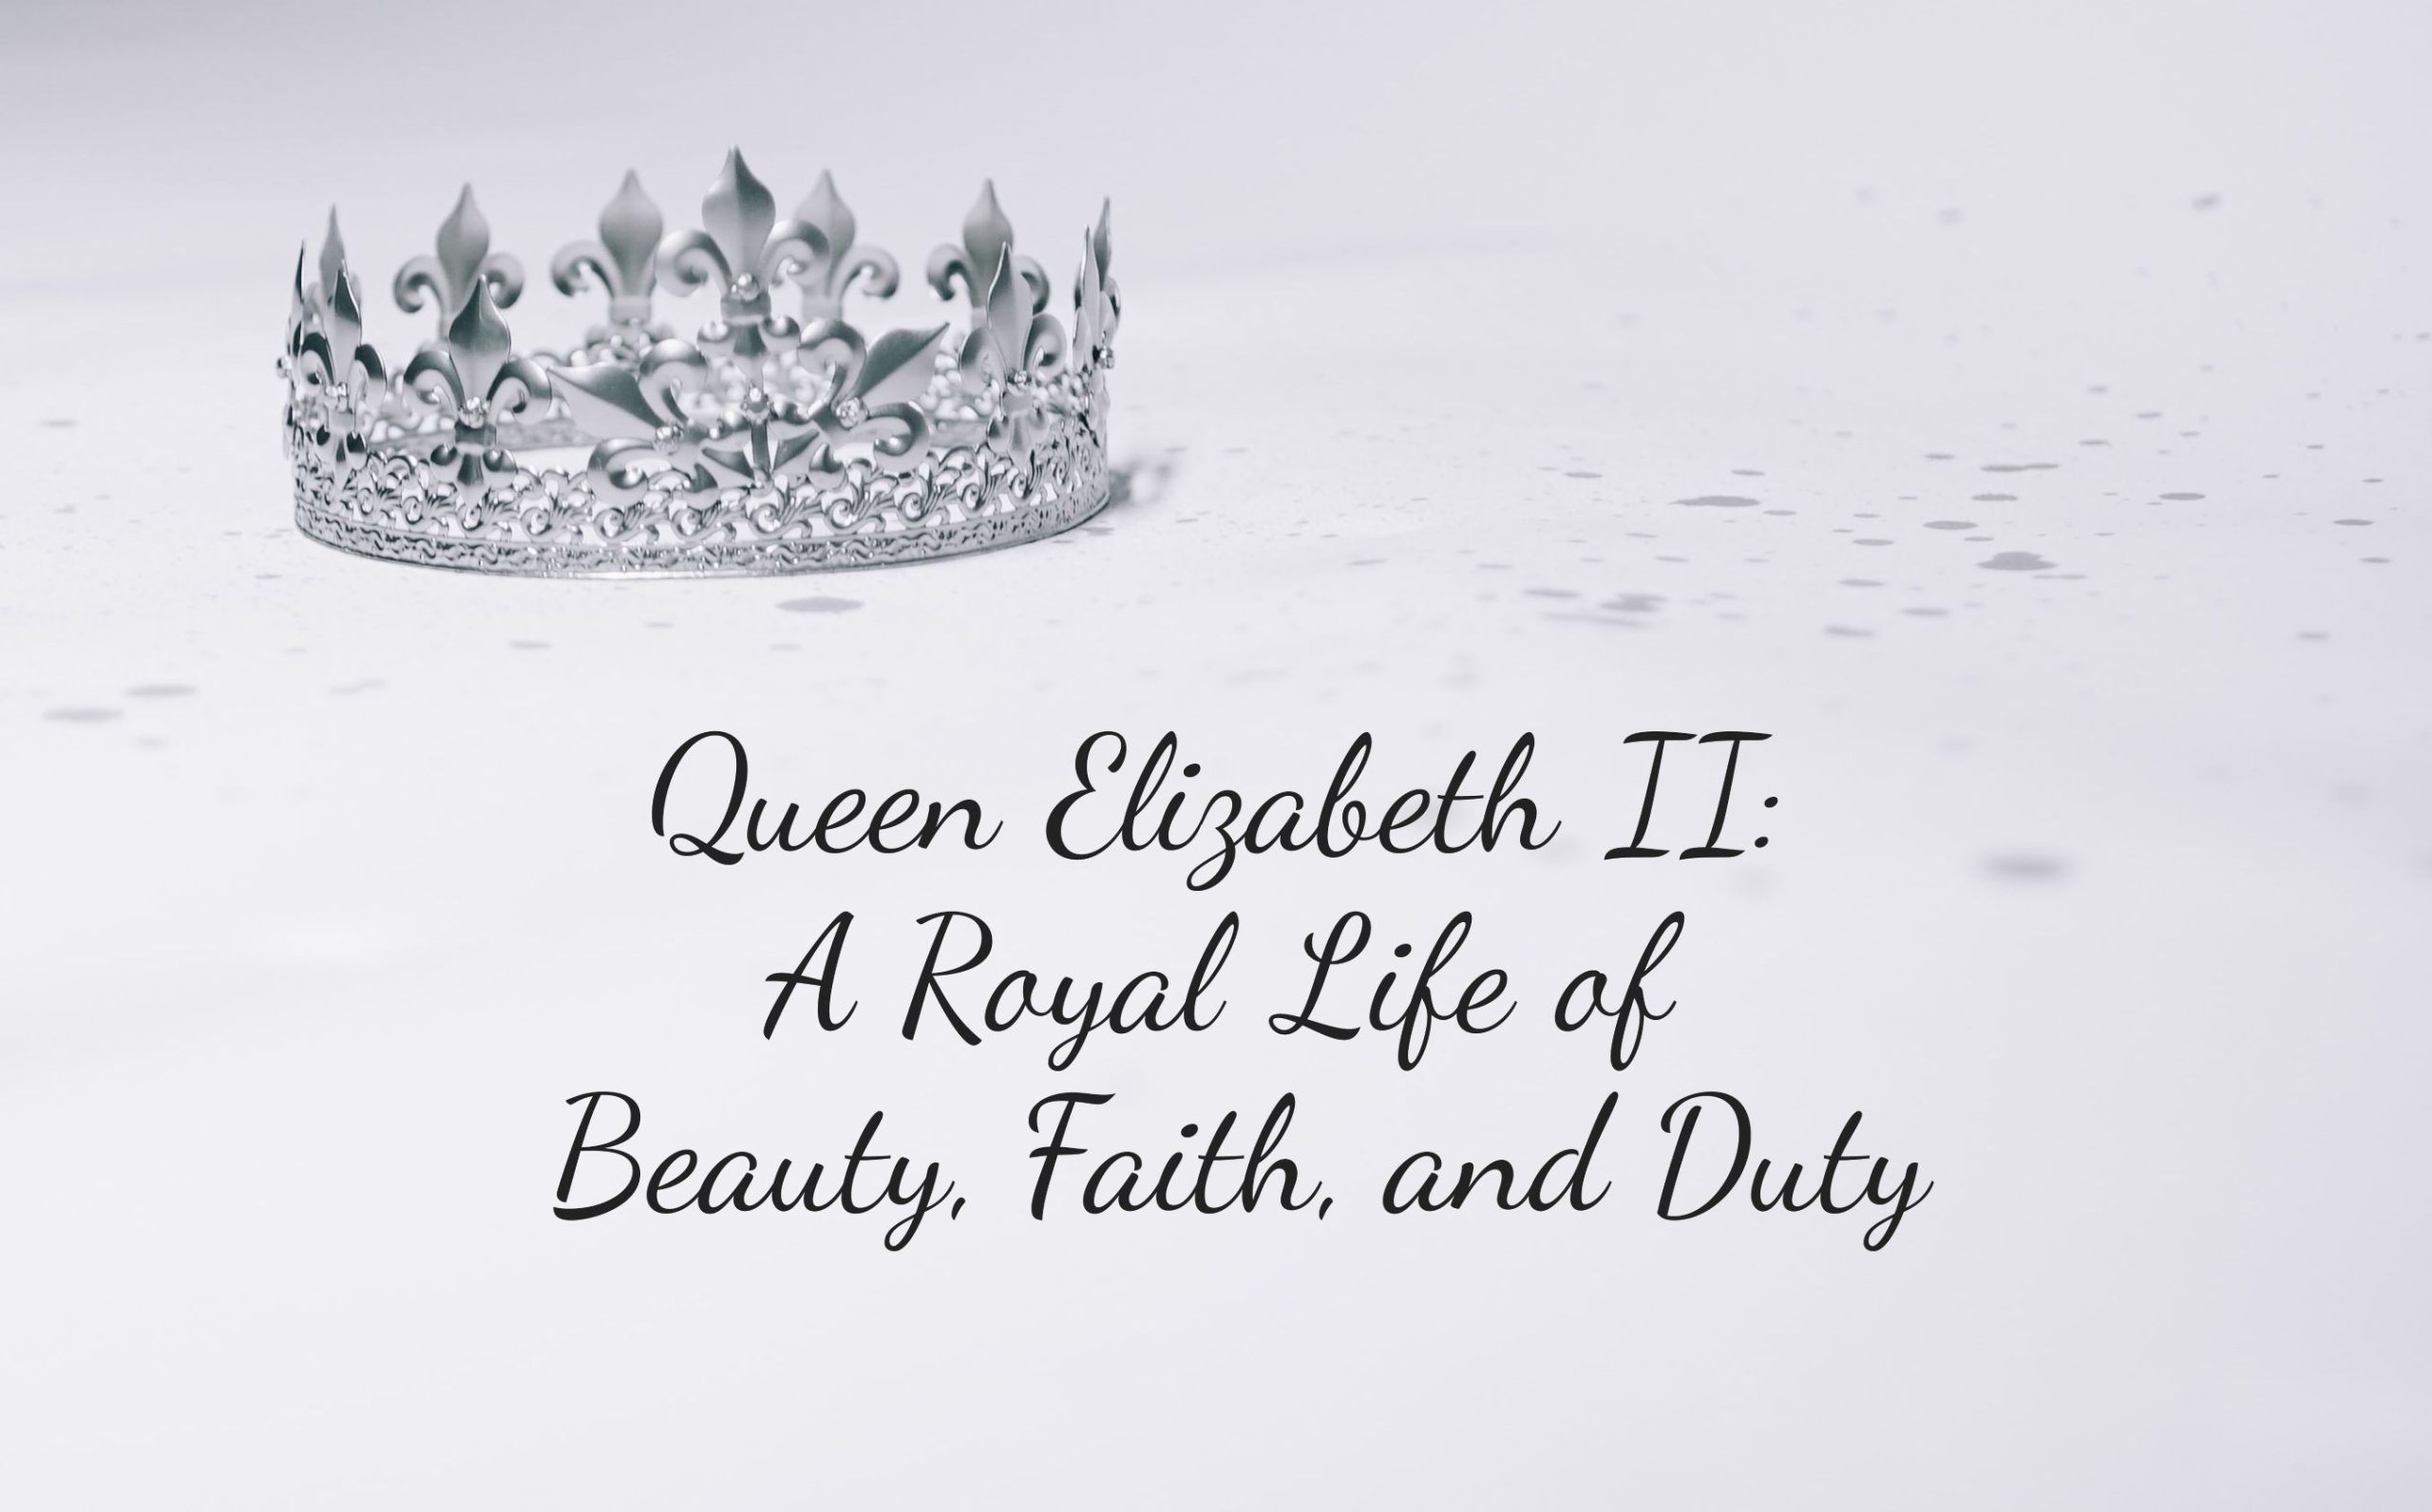 Queen Elizabeth II - A Royal Life of Beauty, Faith, & Duty